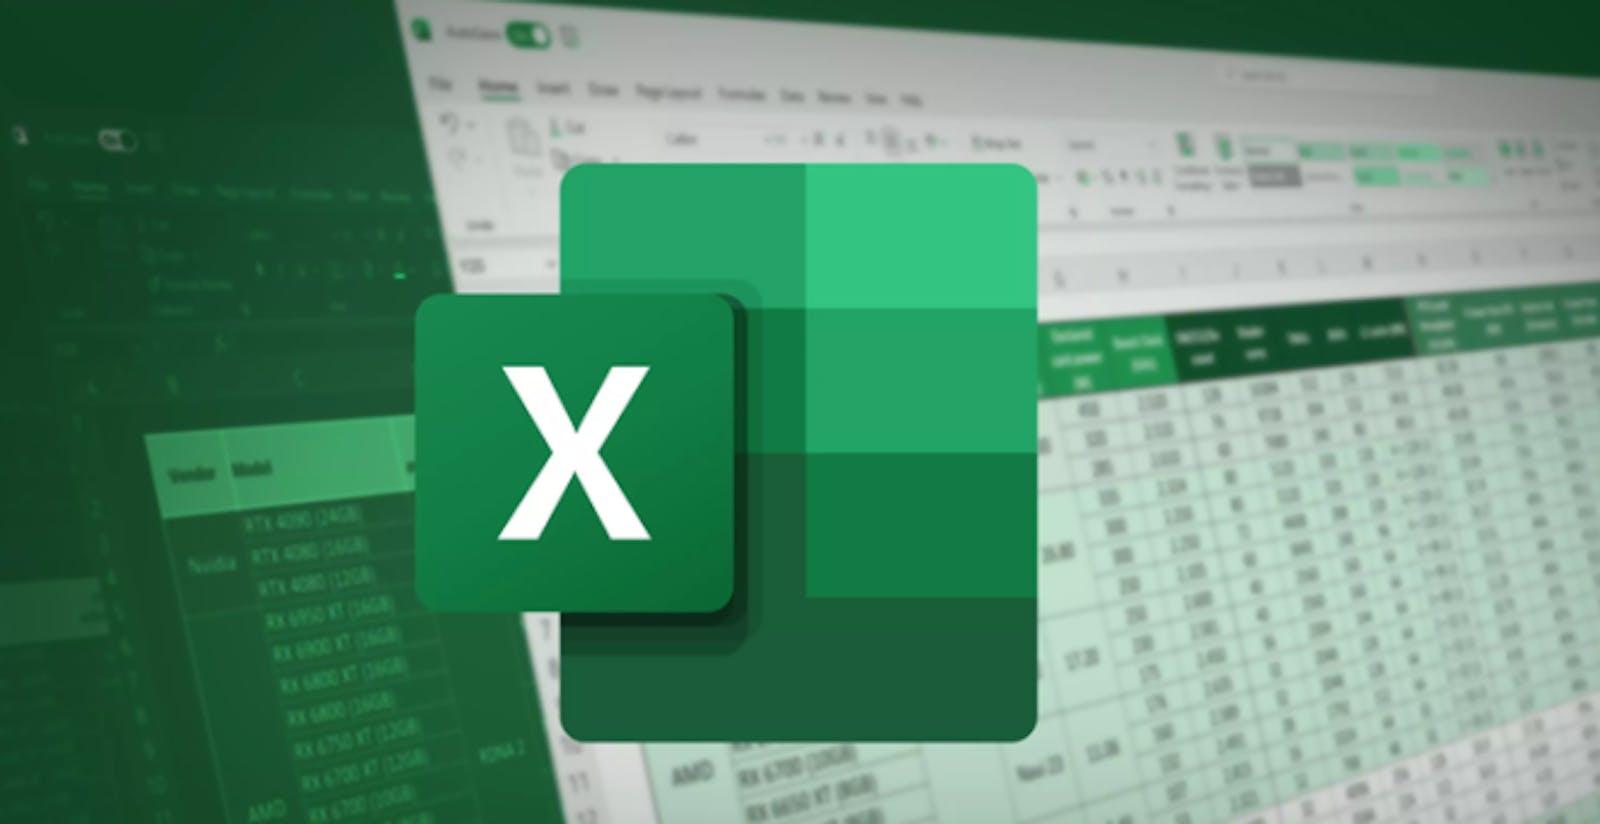 Excel shortcut keys you SHOULD know!